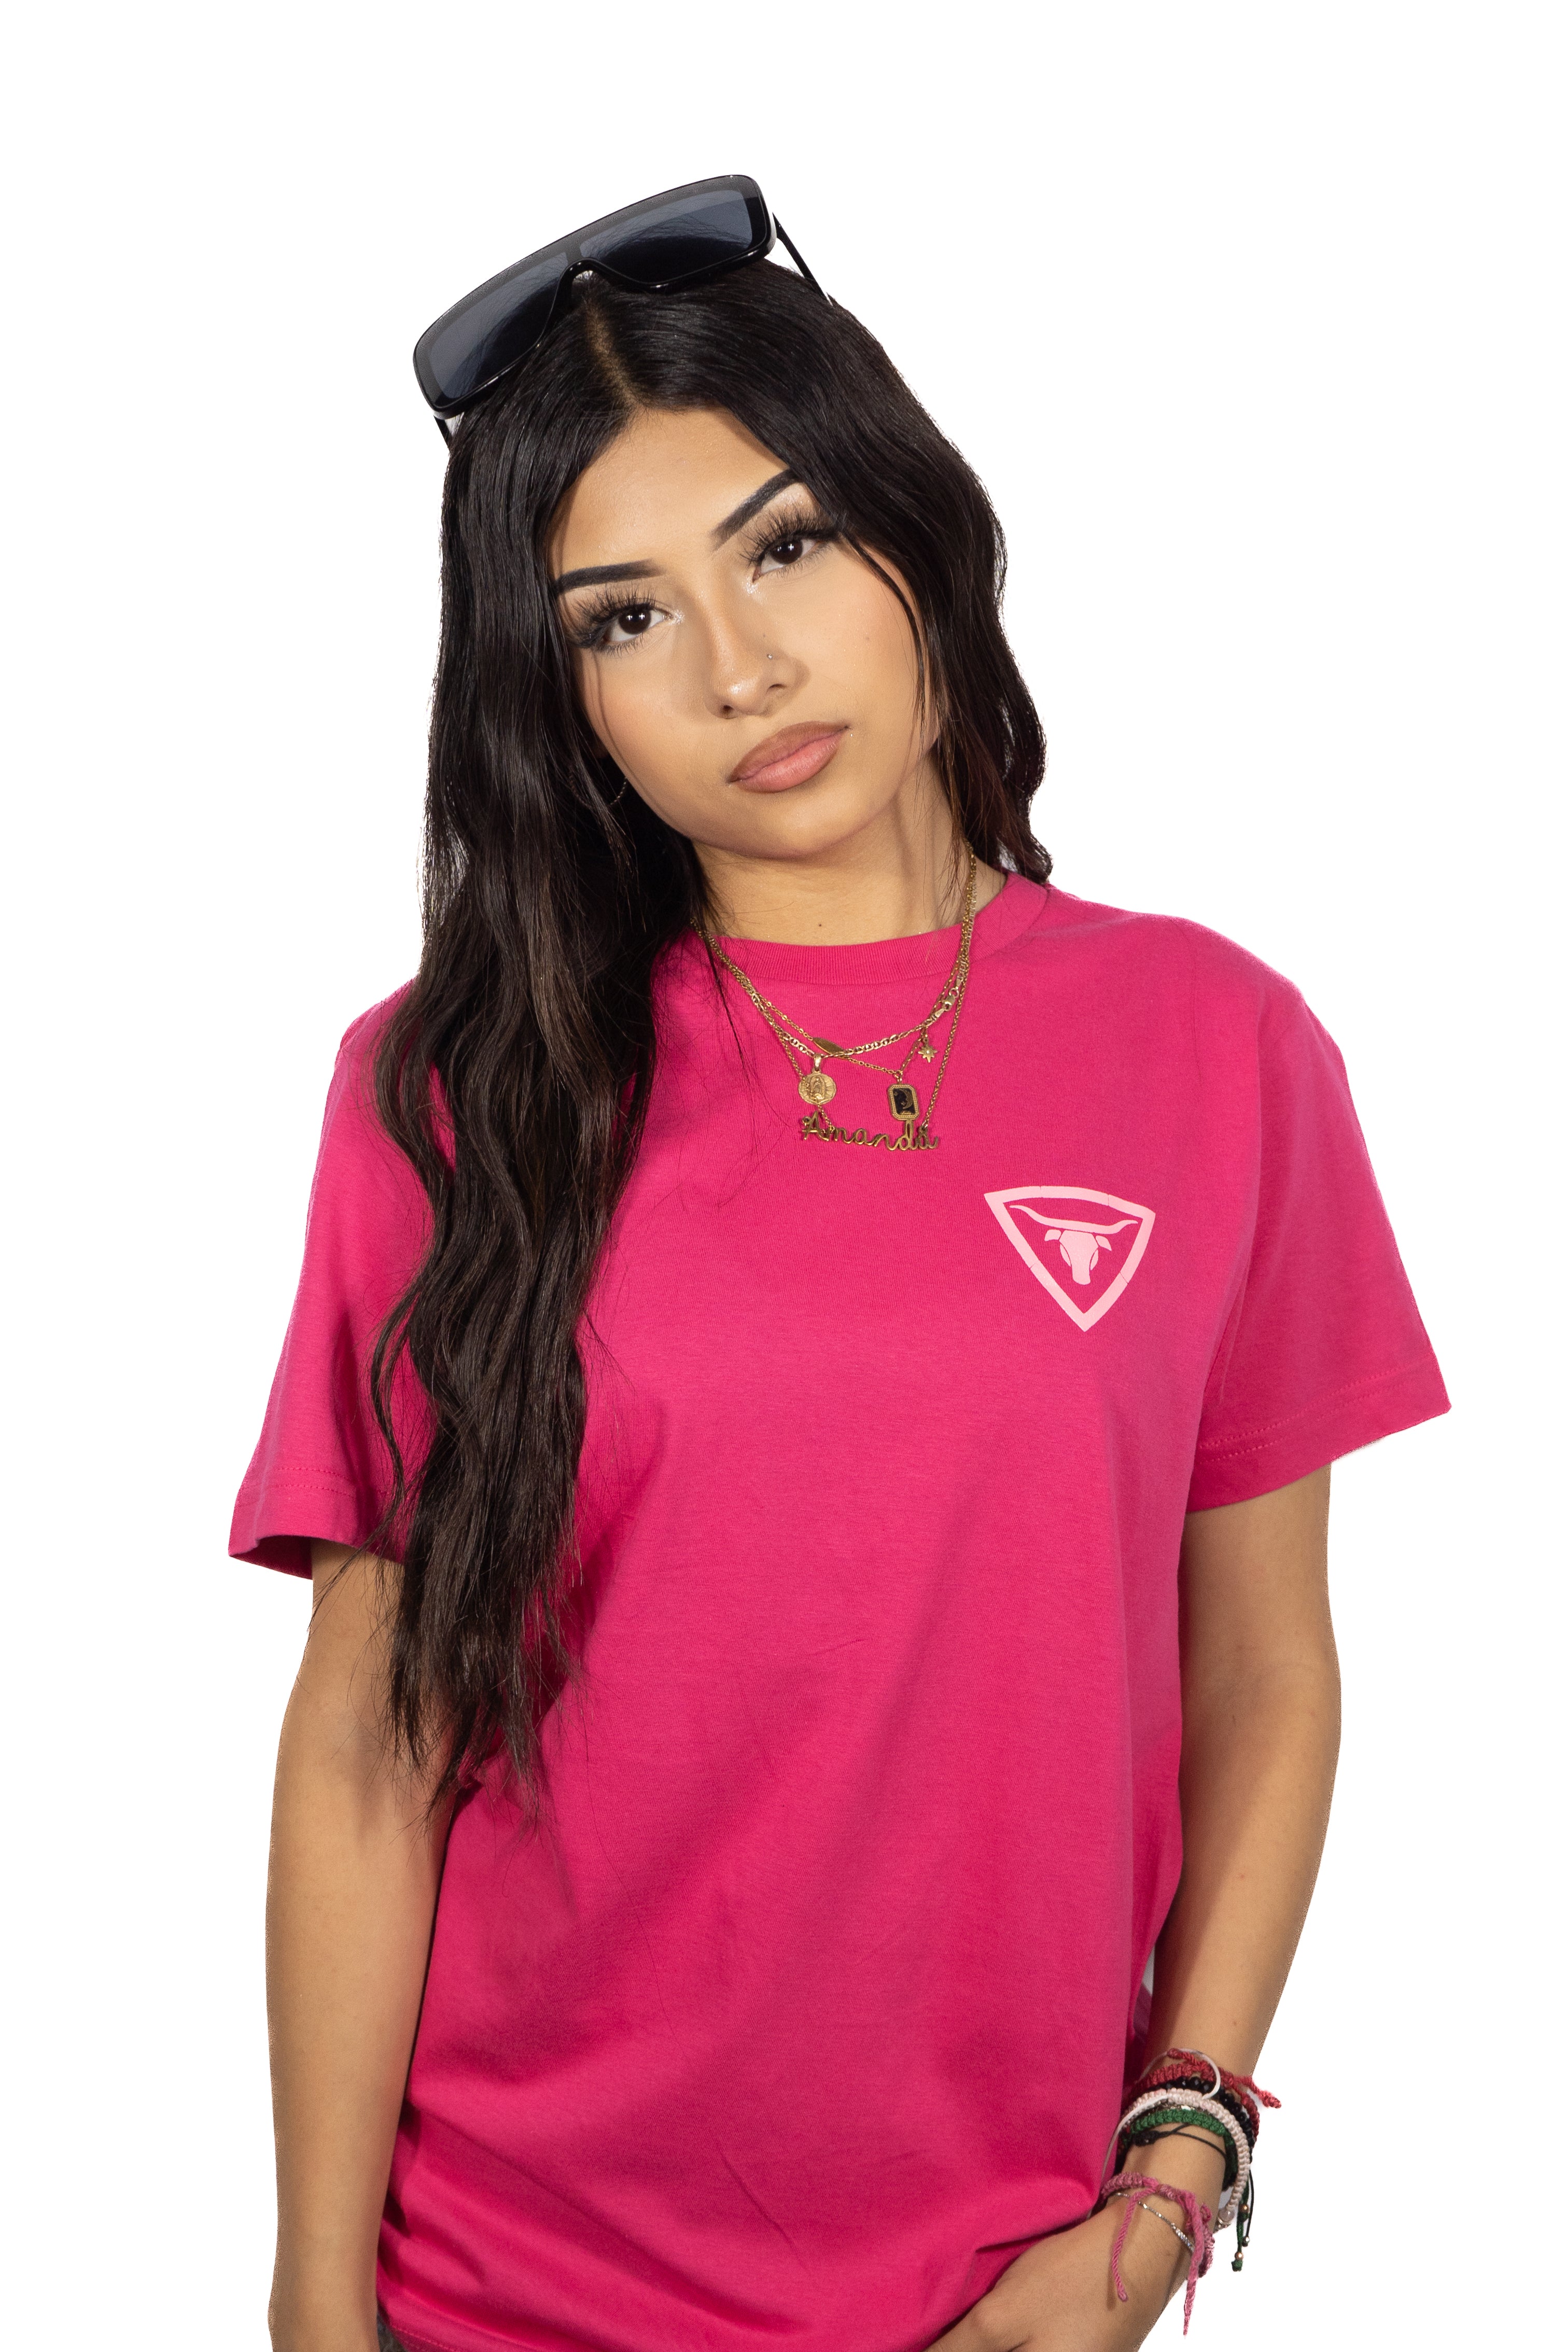 Puro Desmadre “Hot - Pink” Brand Desmadre Puro Shirt